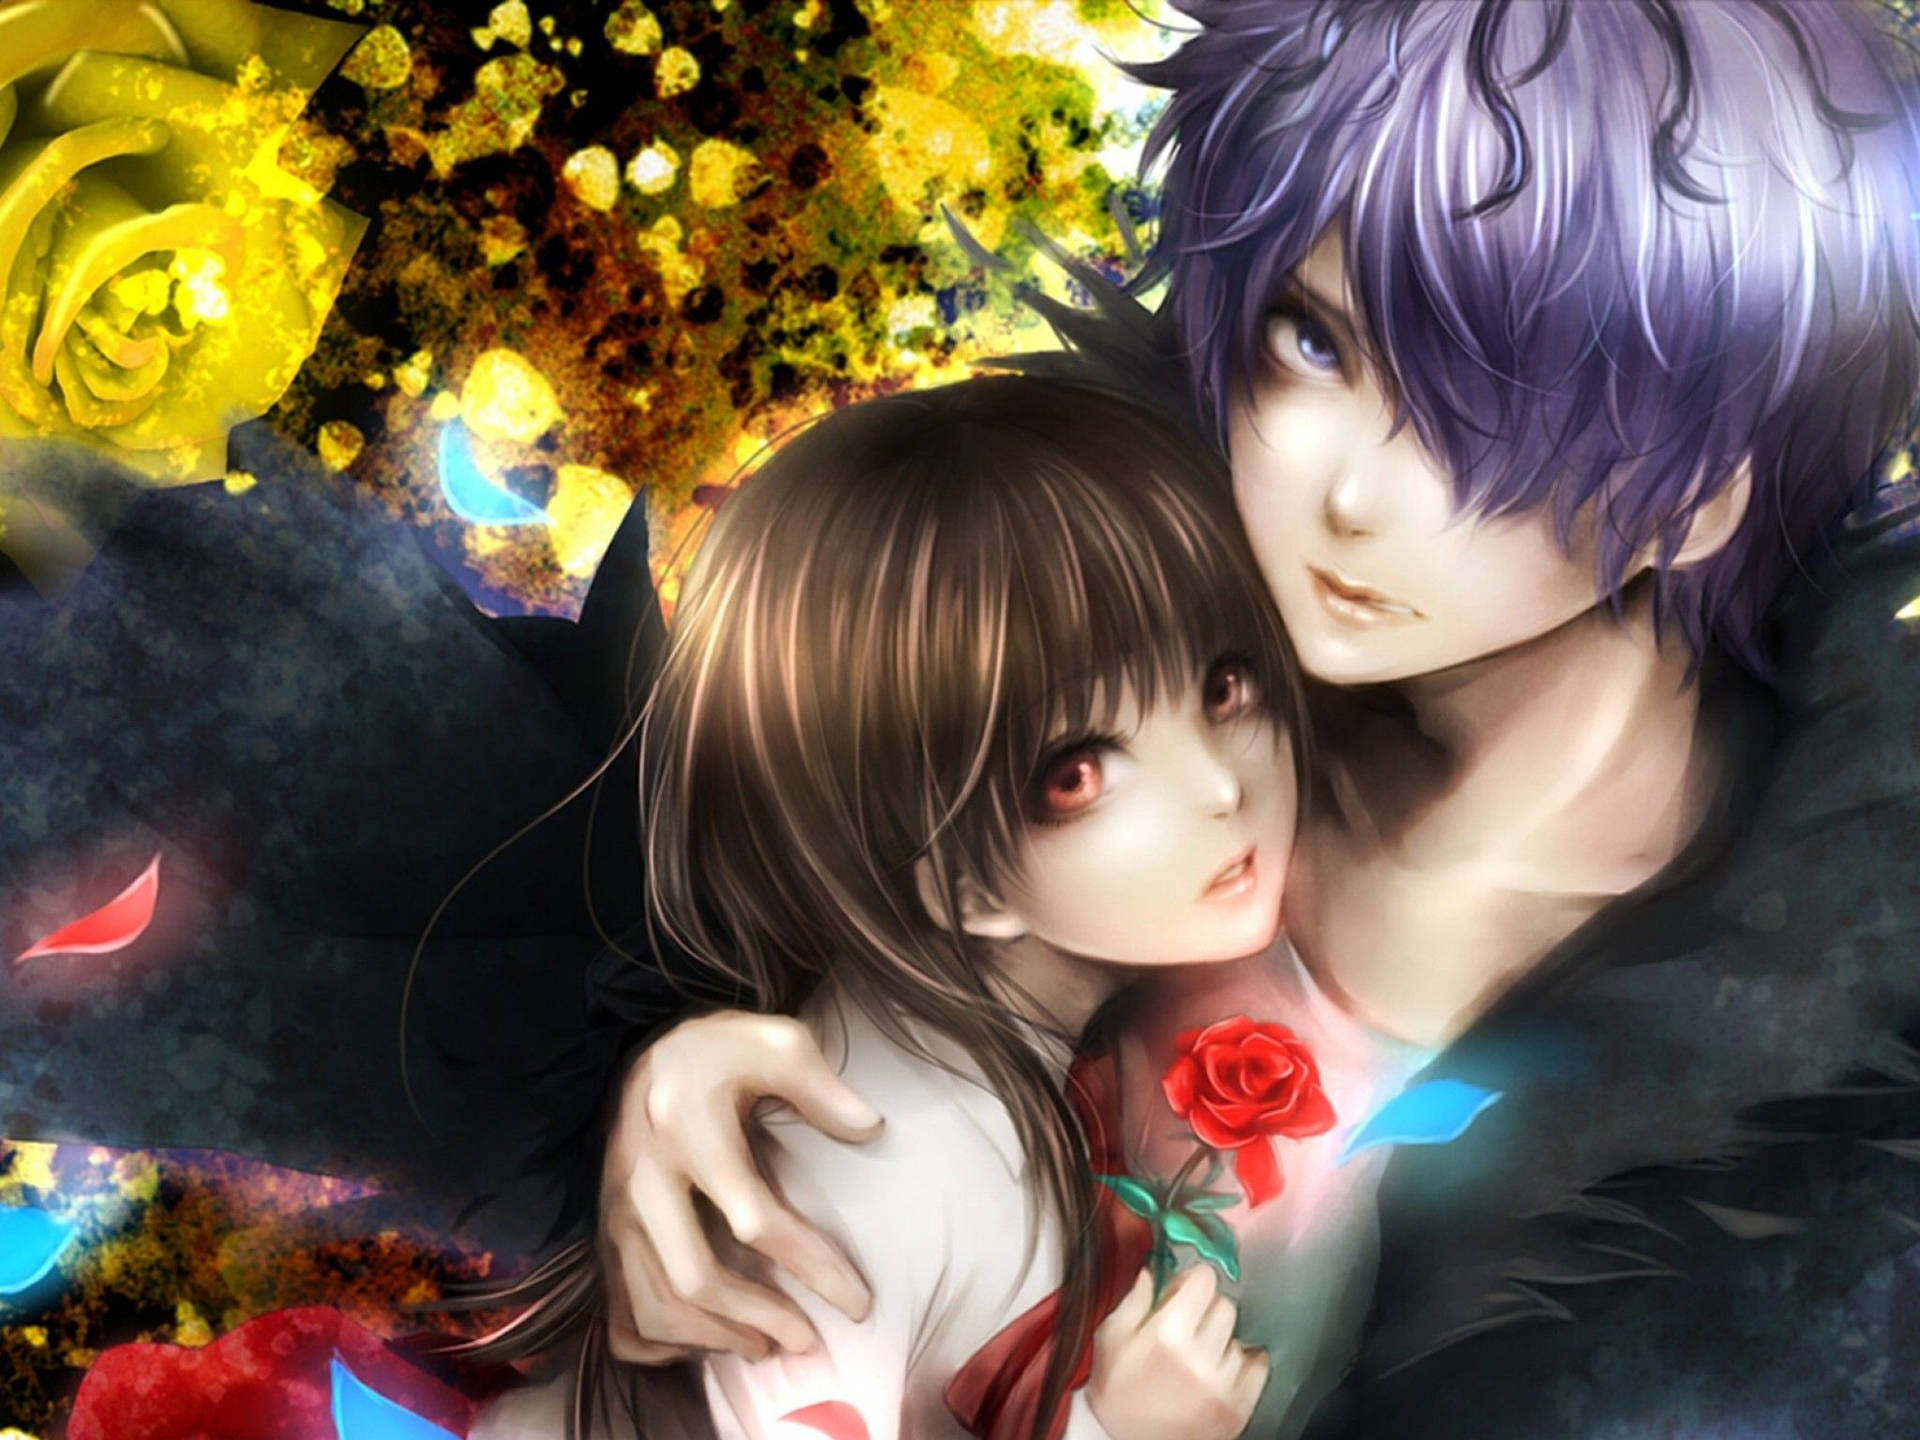 Anime Couple Cuddling by acdcfan1447 on DeviantArt